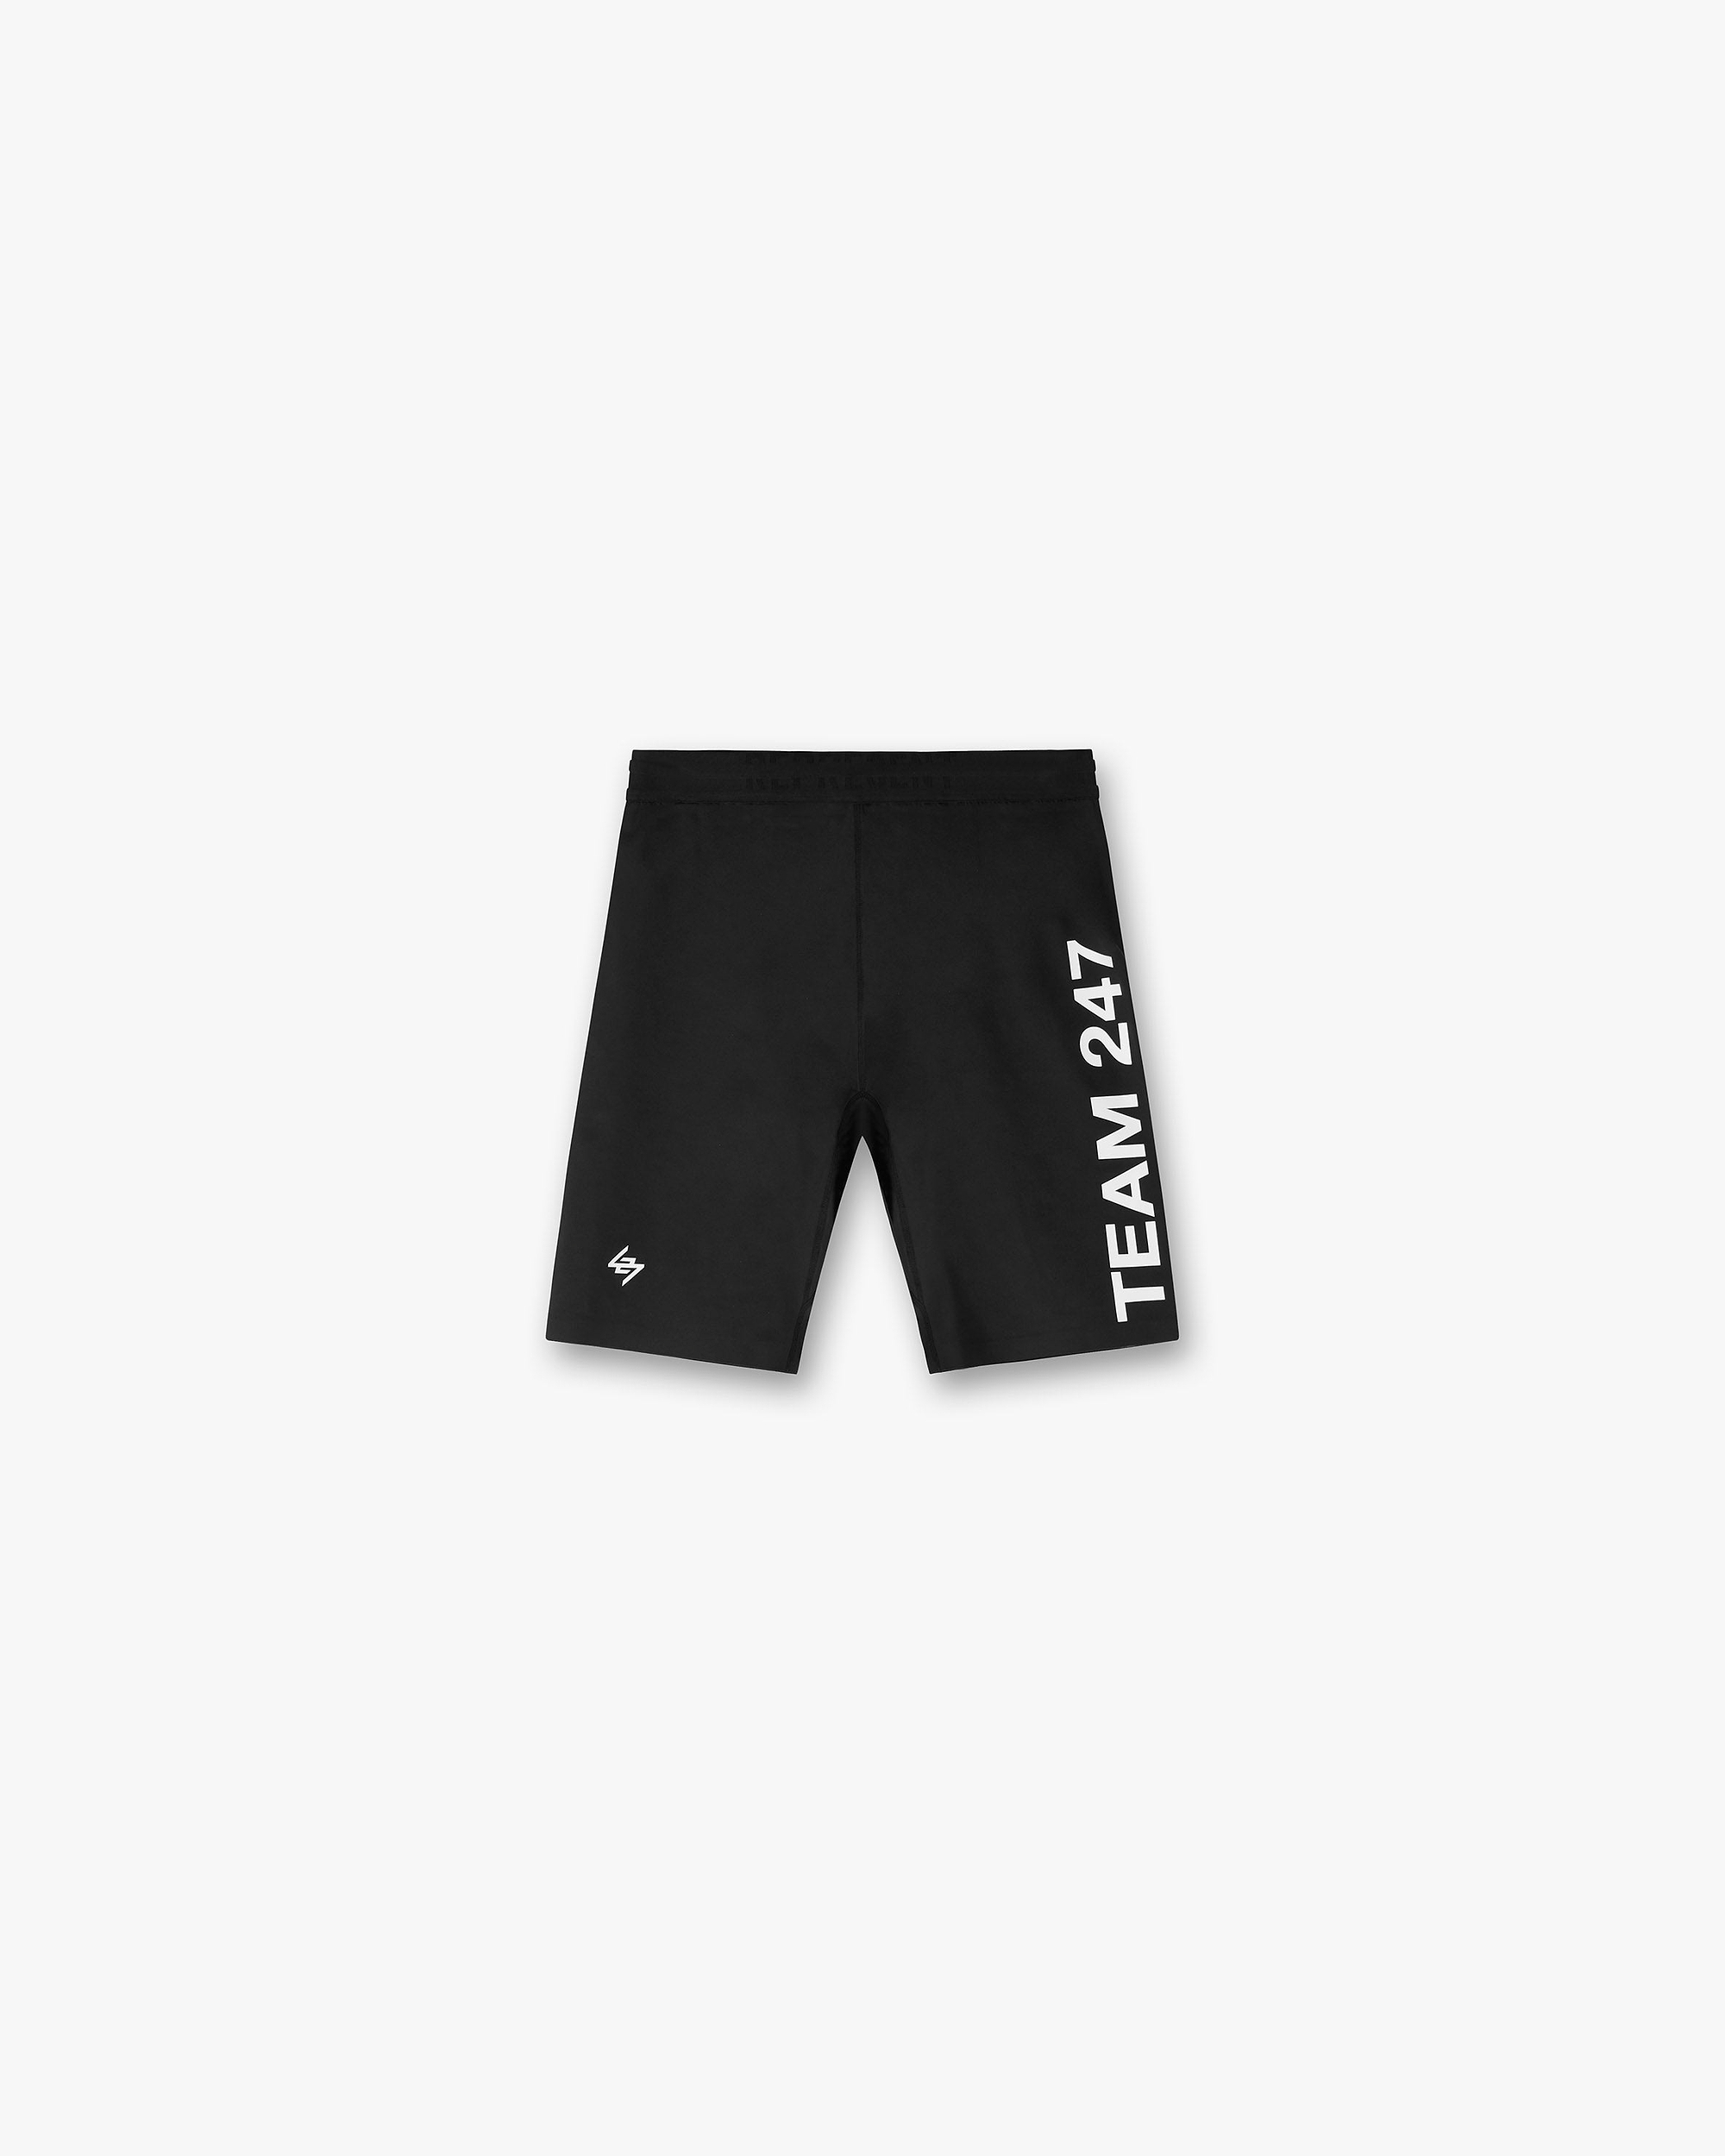 Team 247 Half Tight | Black Shorts 247 | Represent Clo